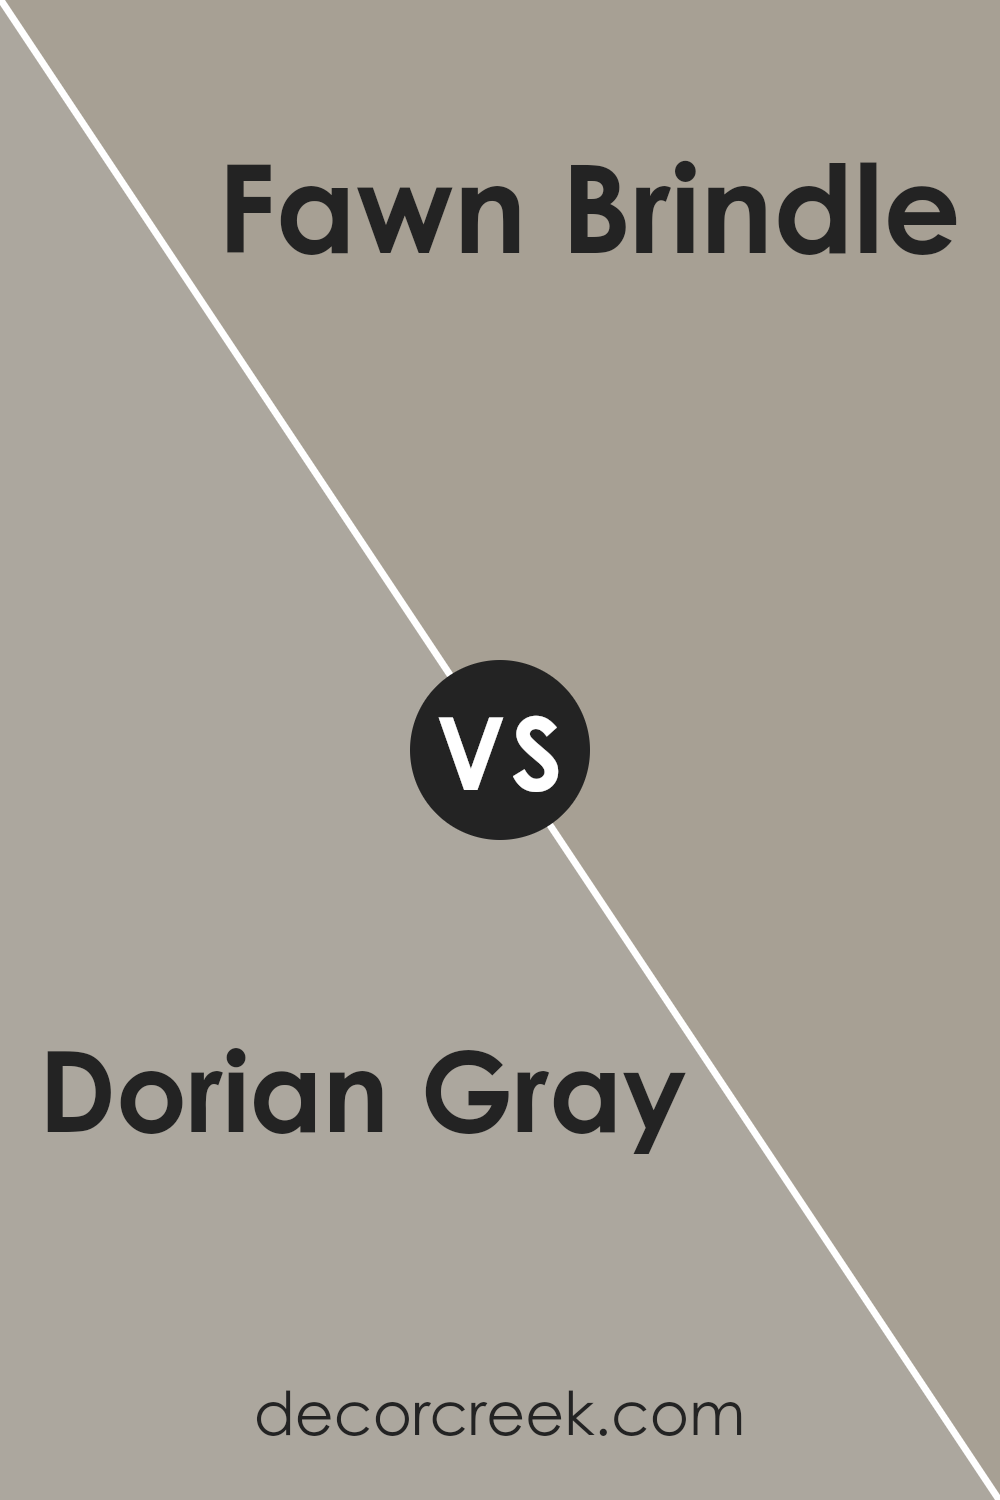 dorian_gray_sw_7017_vs_fawn_brindle_sw_7640